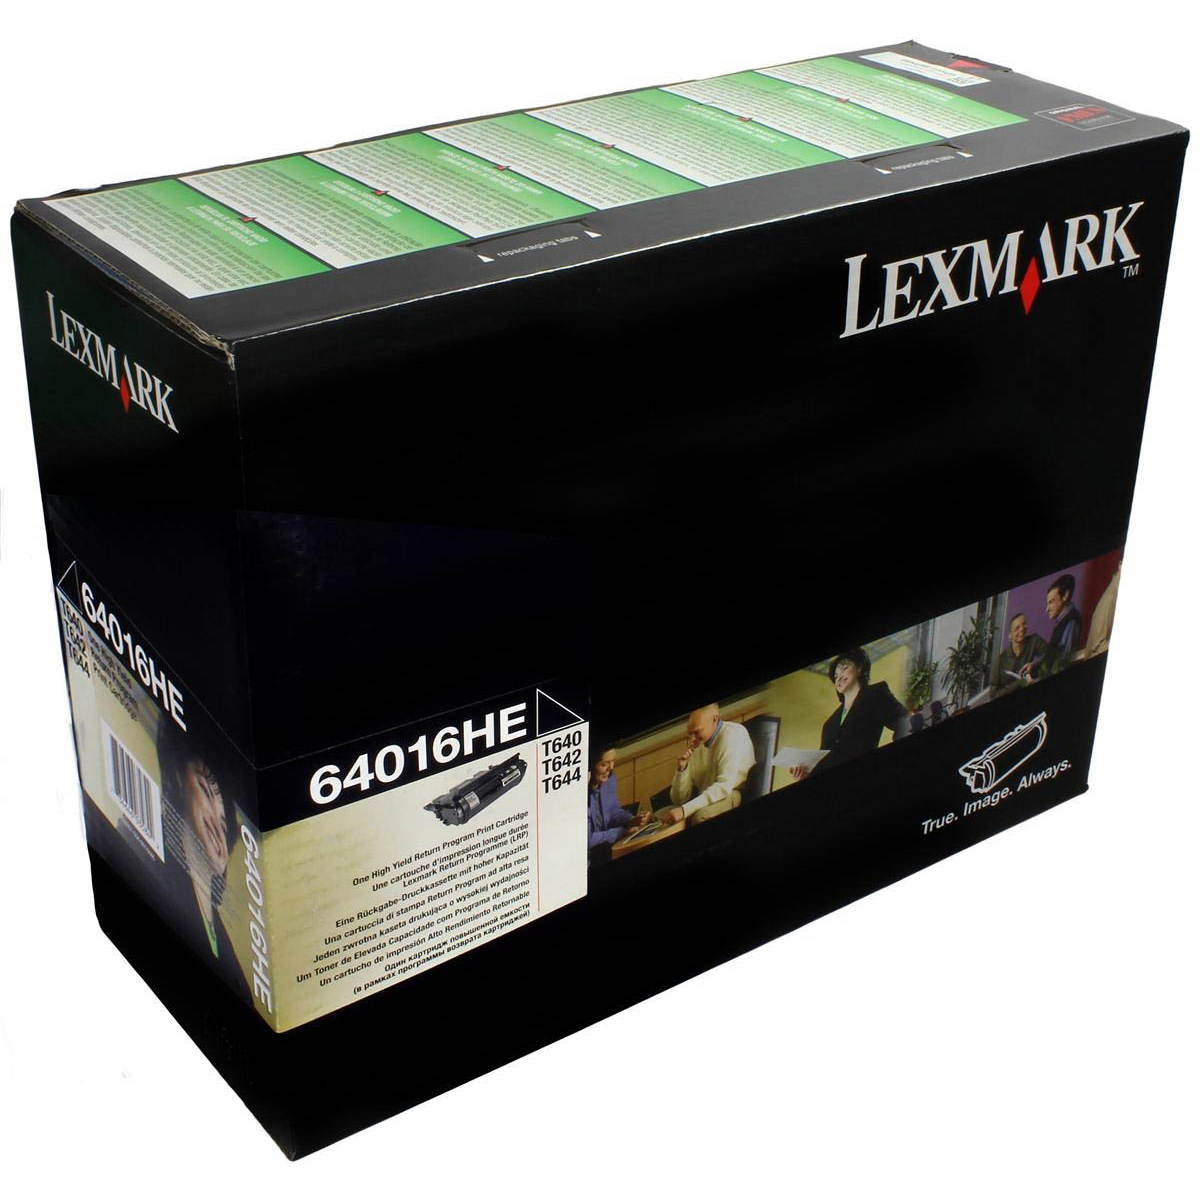 Original Lexmark 64016HE Black High Capacity Toner Cartridge (64016HE)